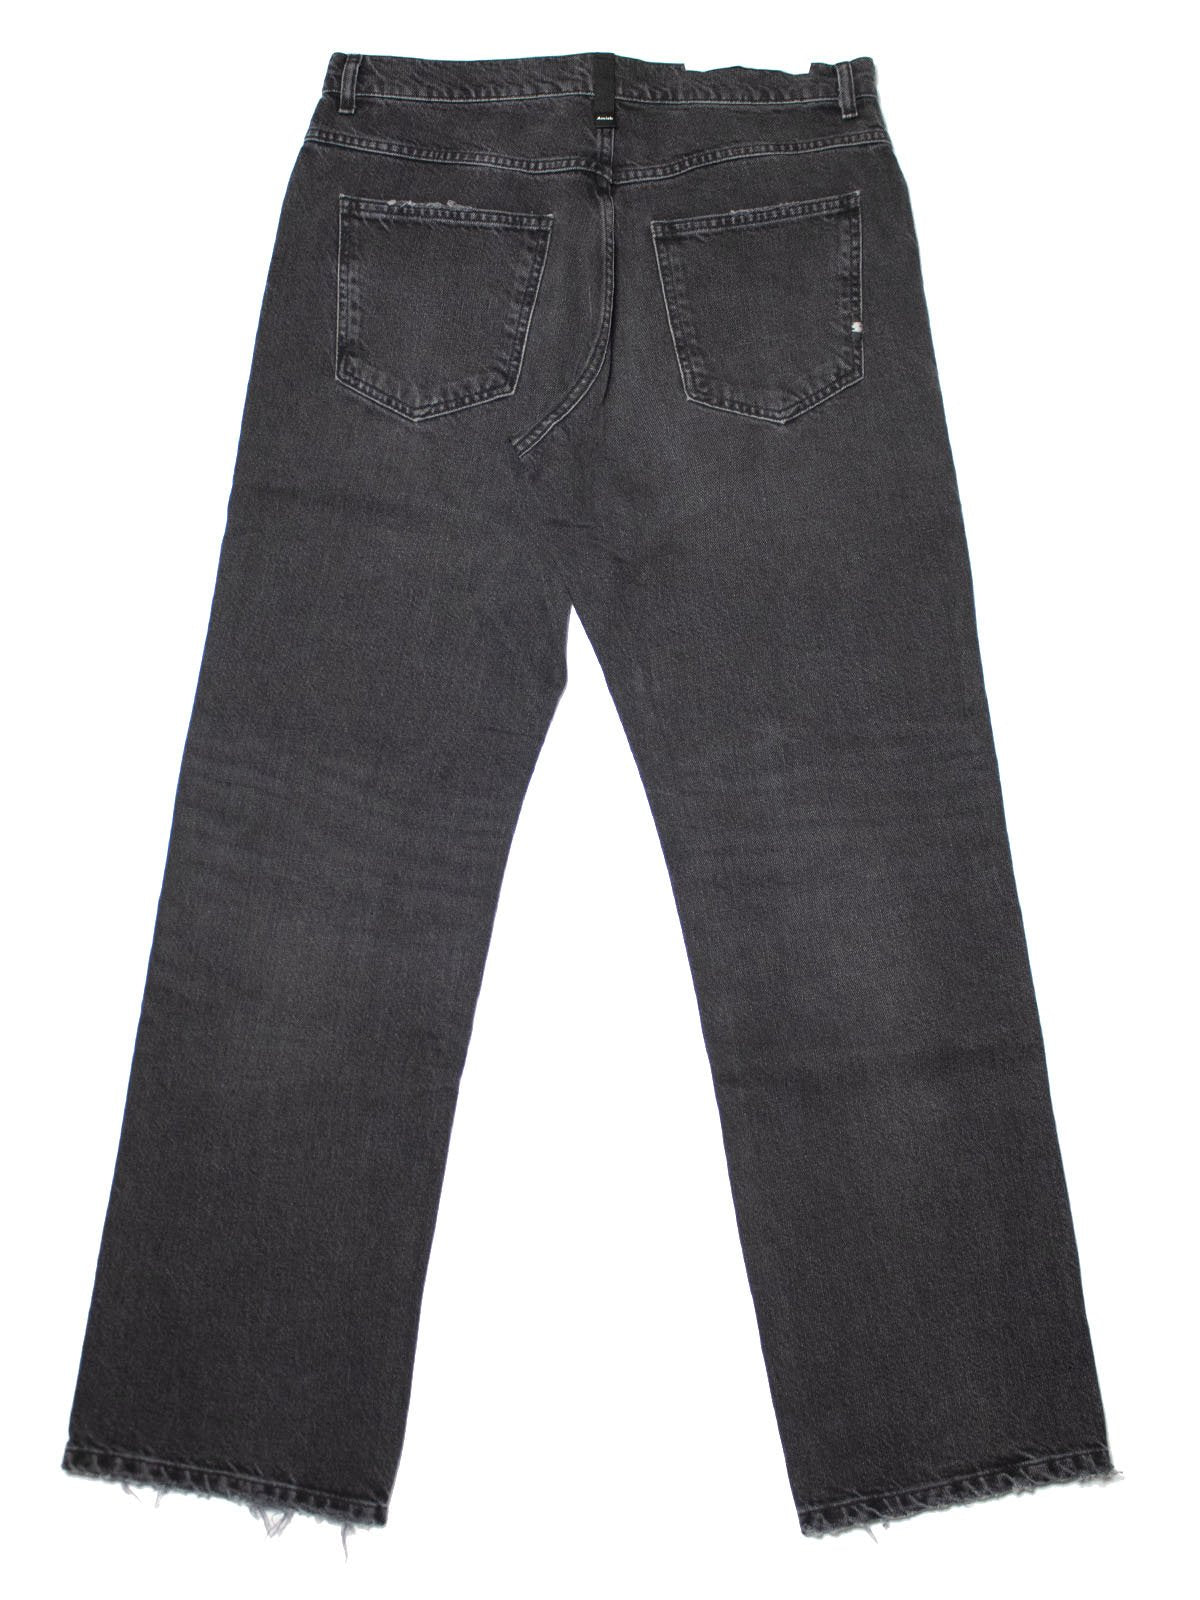 Jeans Uomo Amish - James Vintage Black Recycled Denim Jeans - Nero